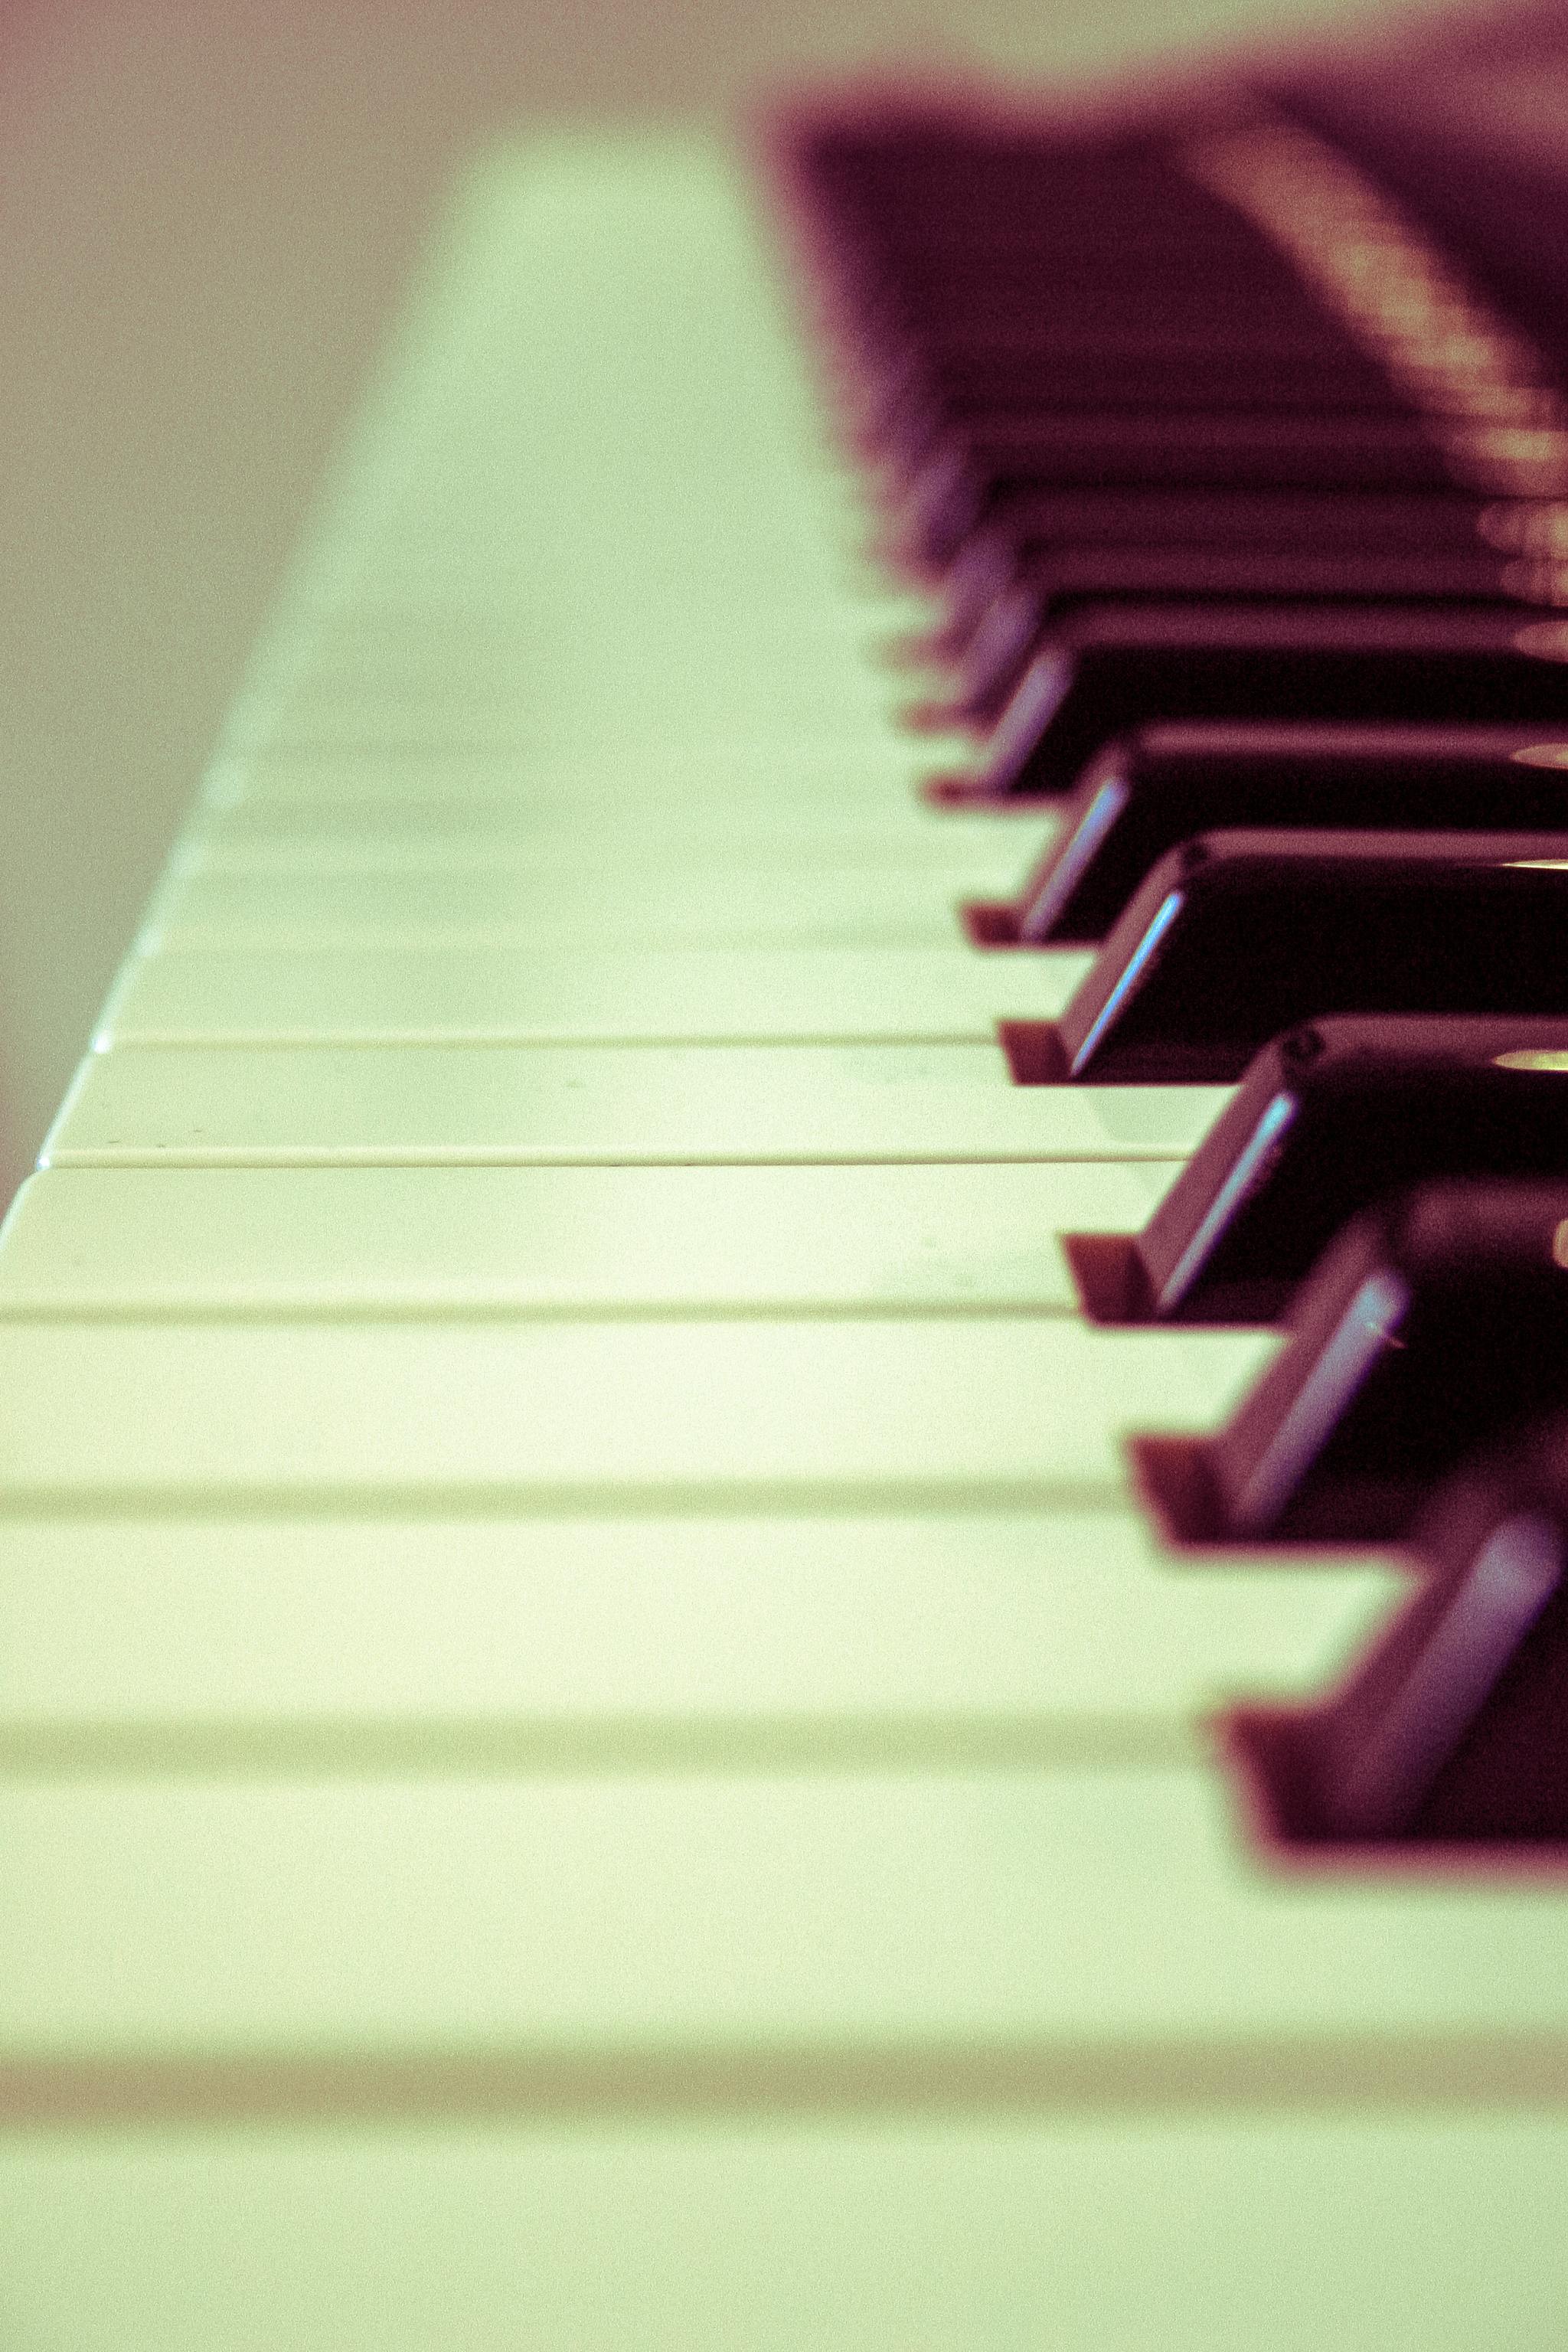 Free stock photo of music musical instrument piano keys